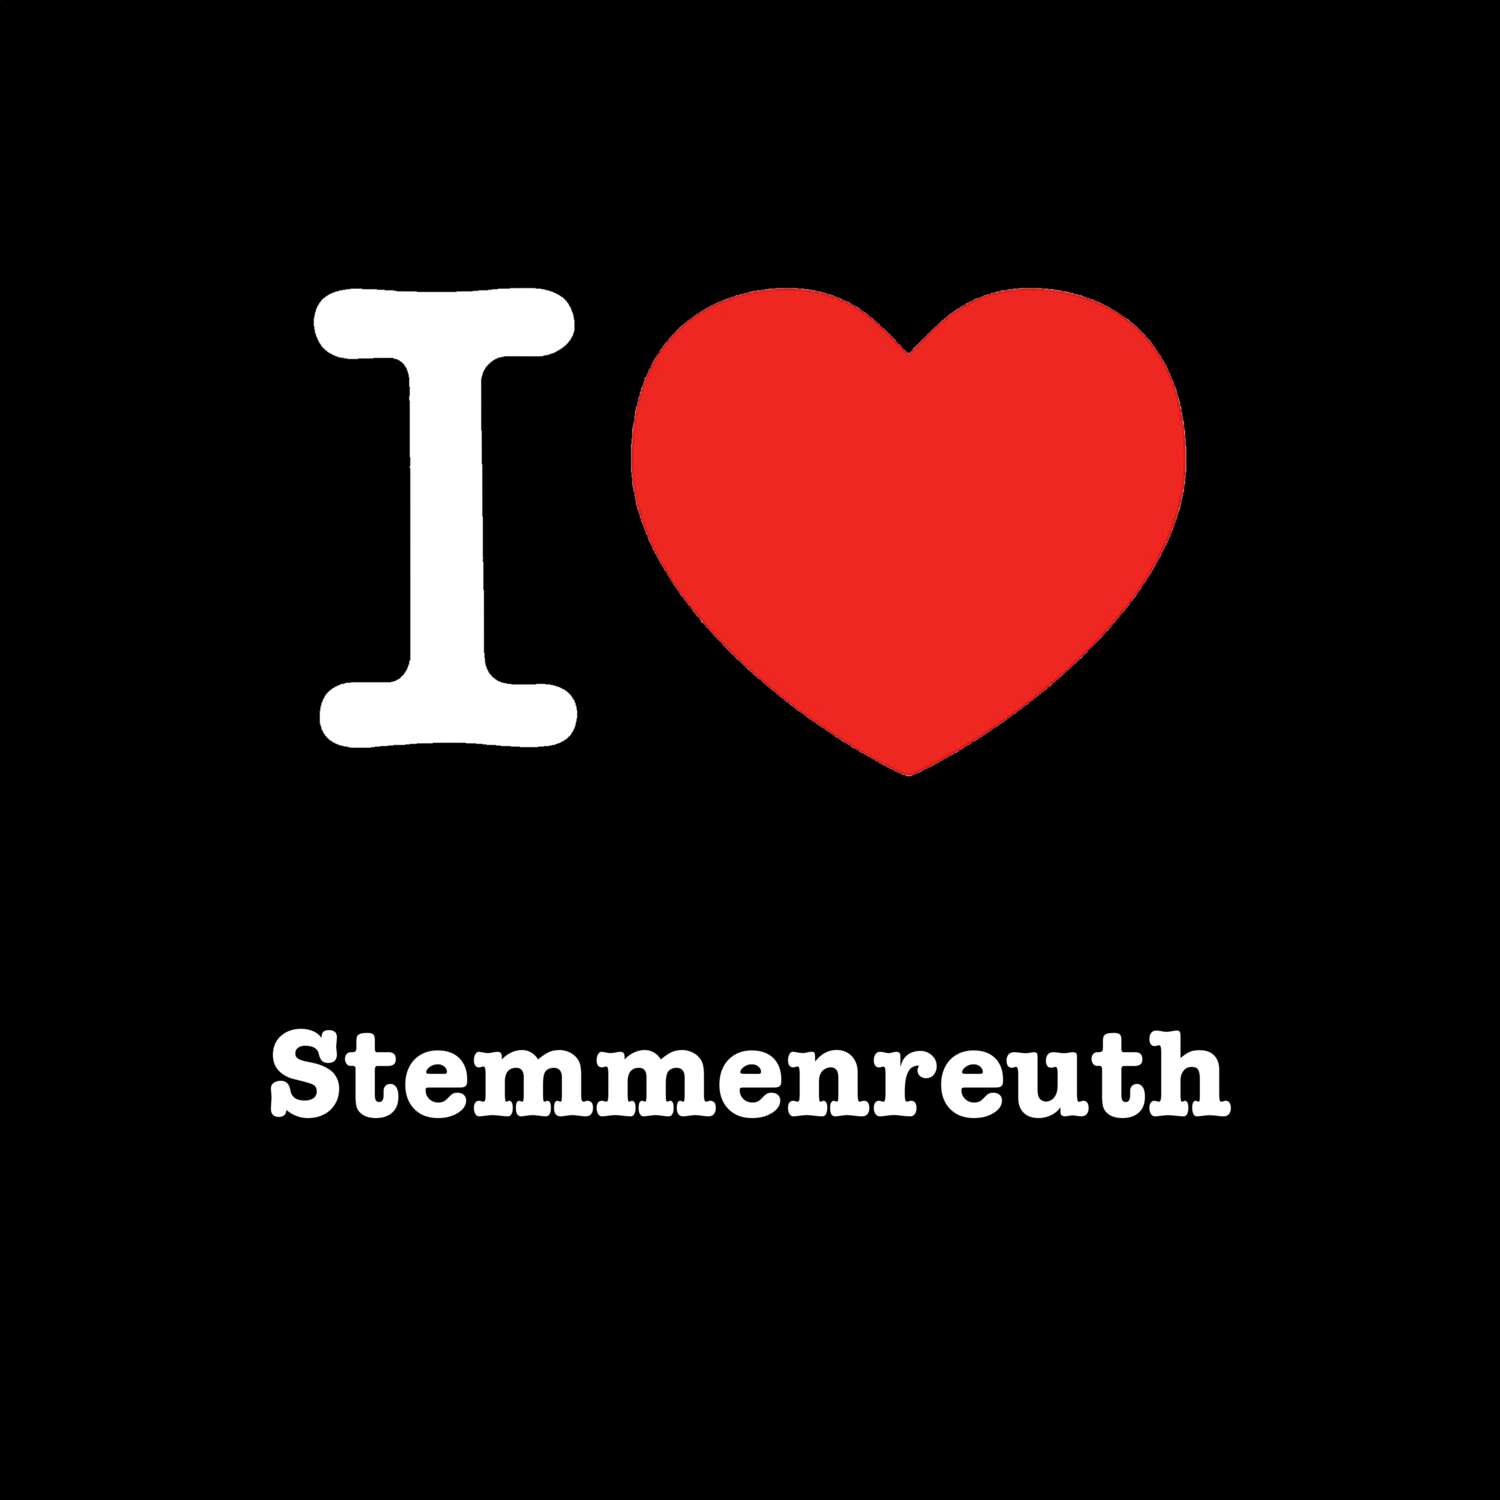 Stemmenreuth T-Shirt »I love«